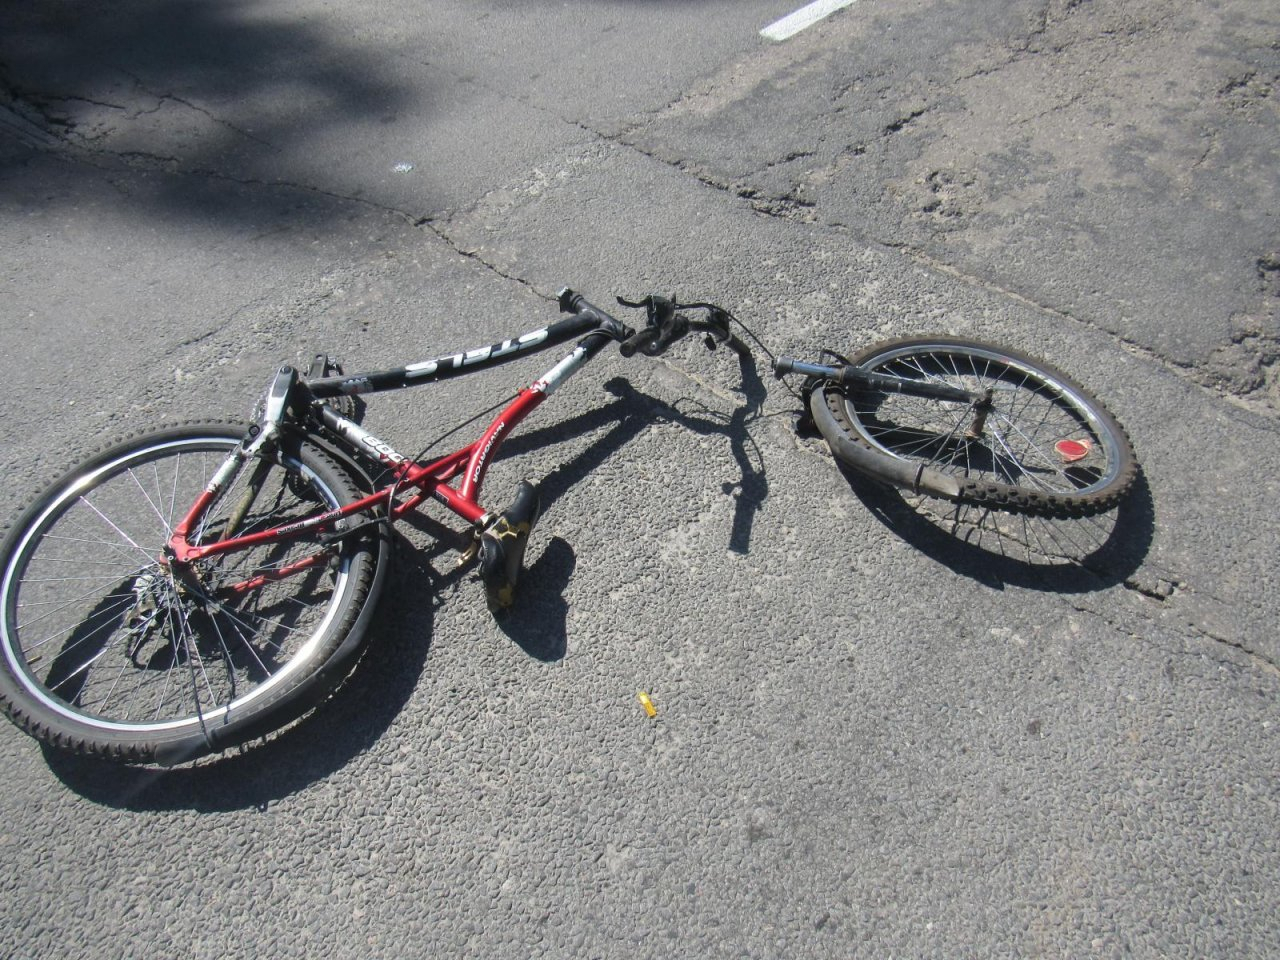 13-летний велосипедист попал под колеса легковушки в Арзамасском районе